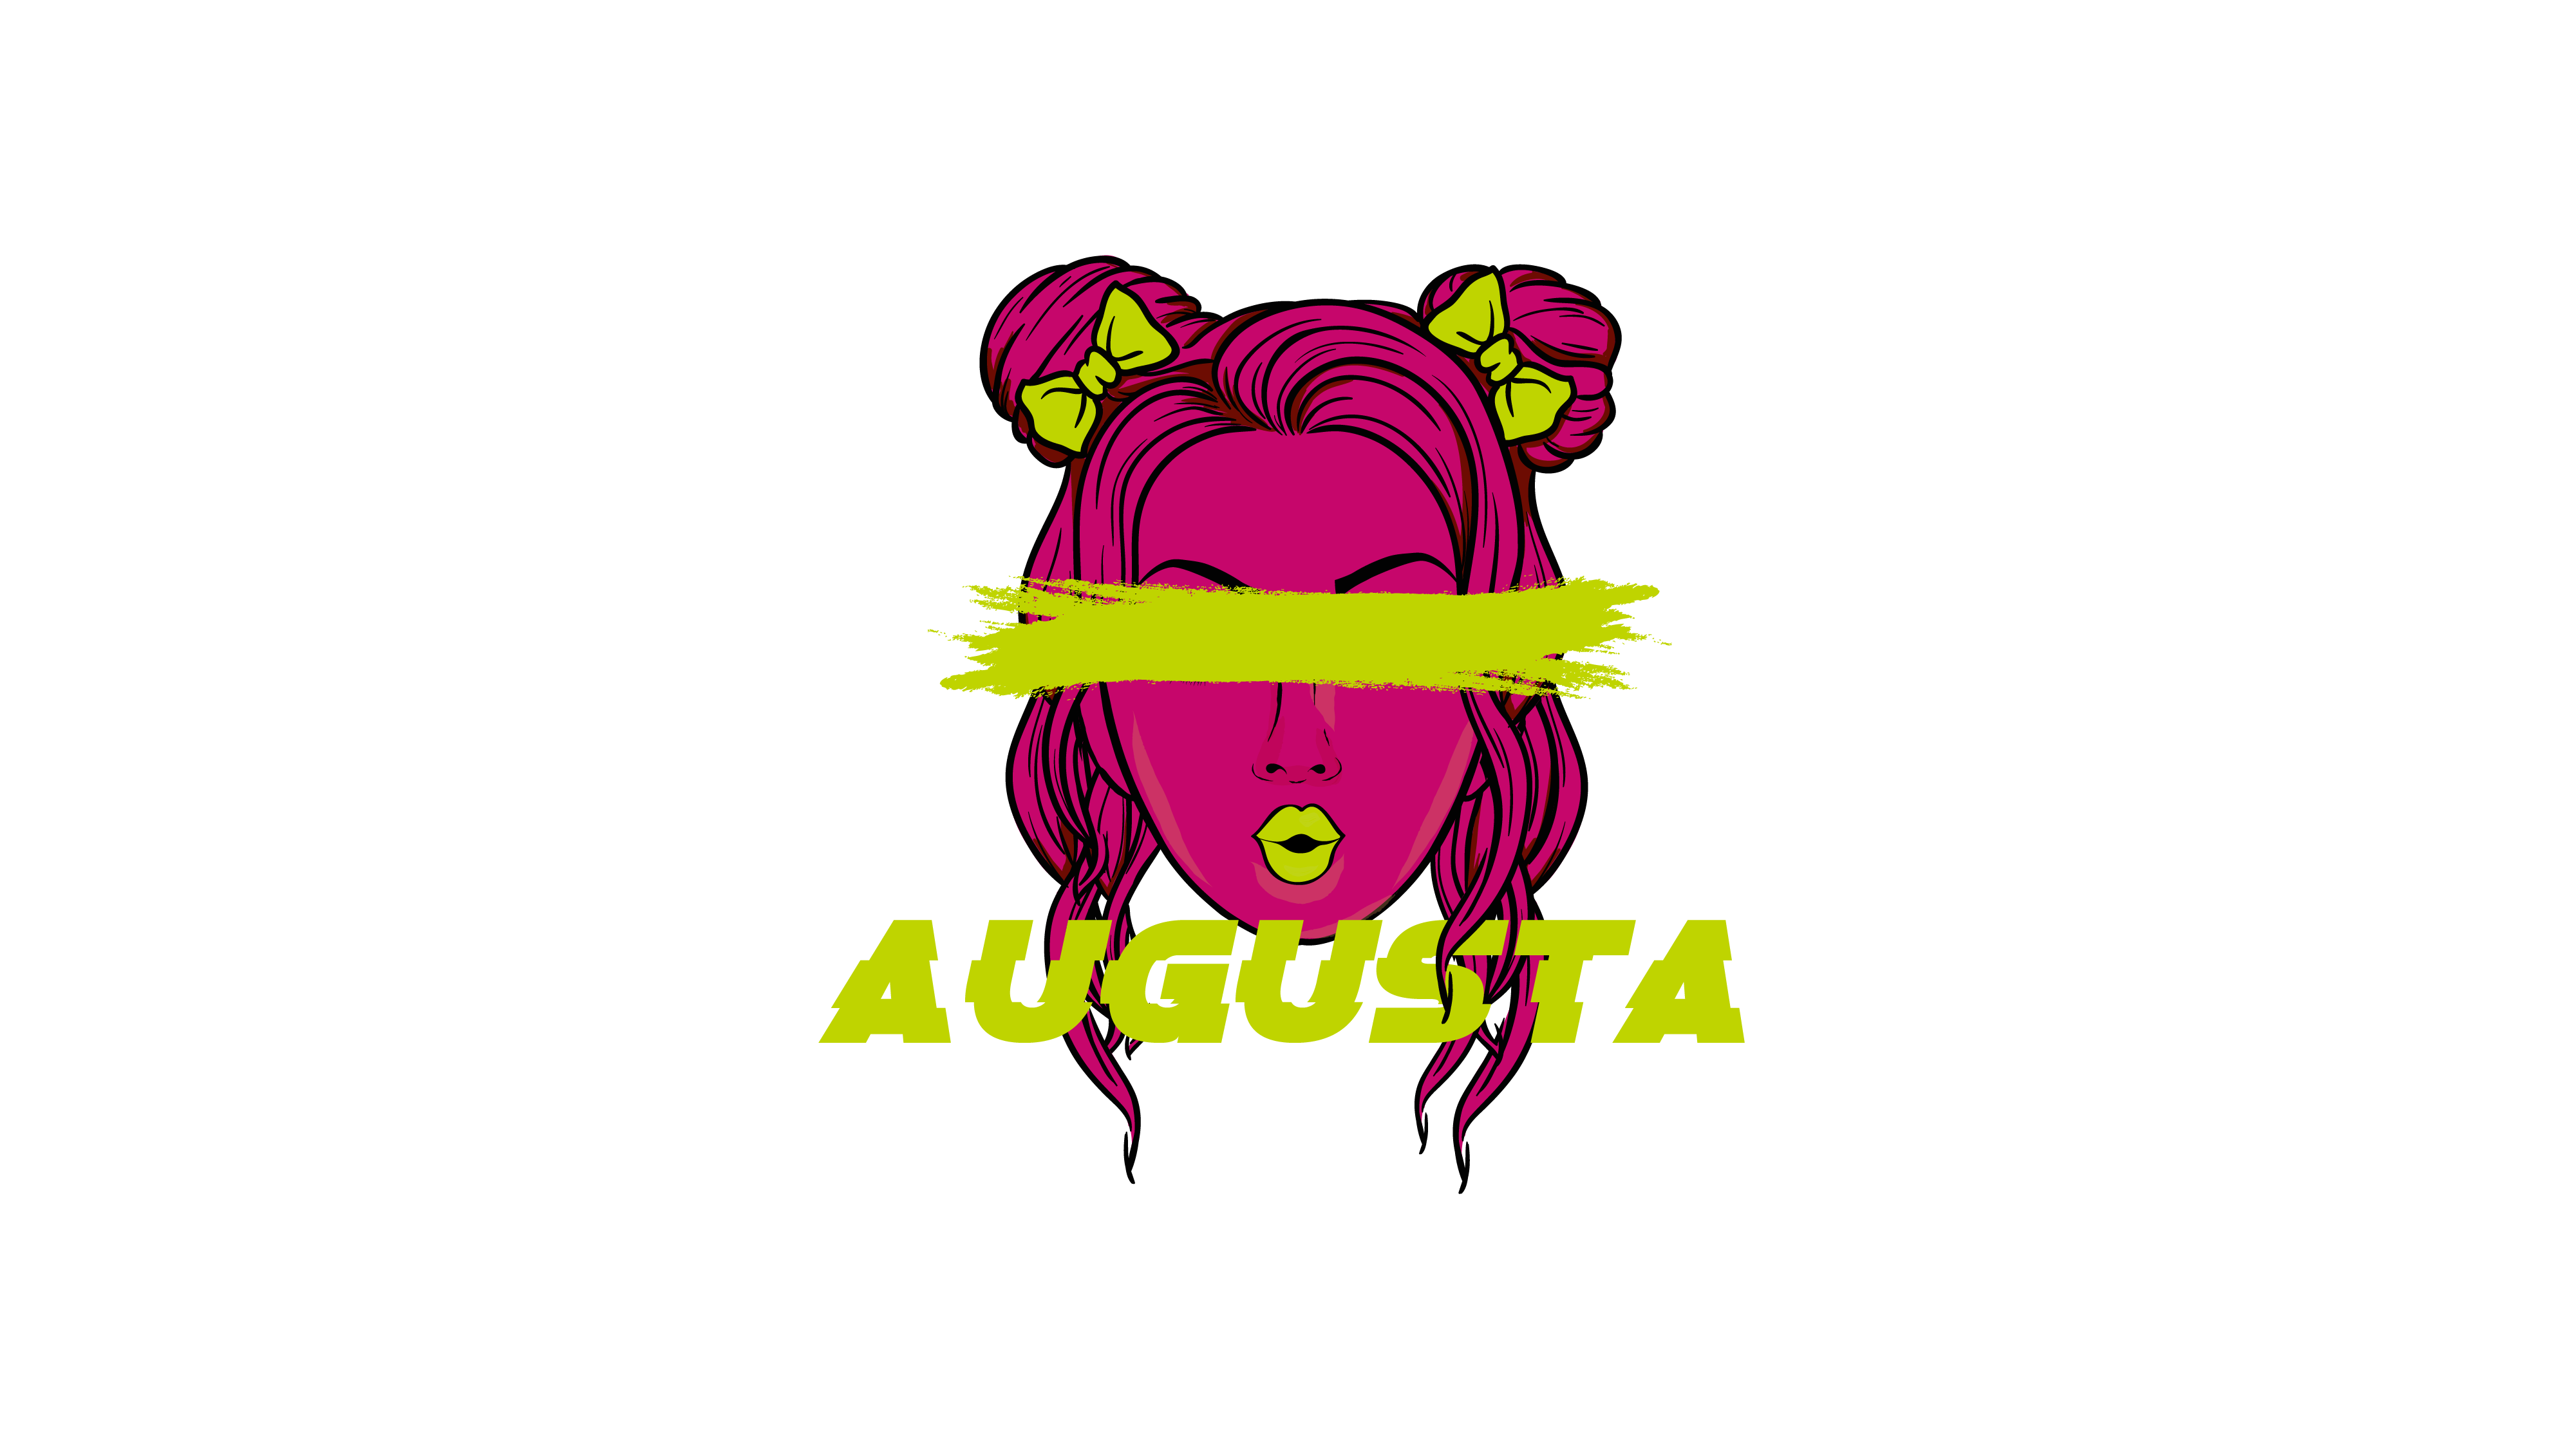 Augusta Loja